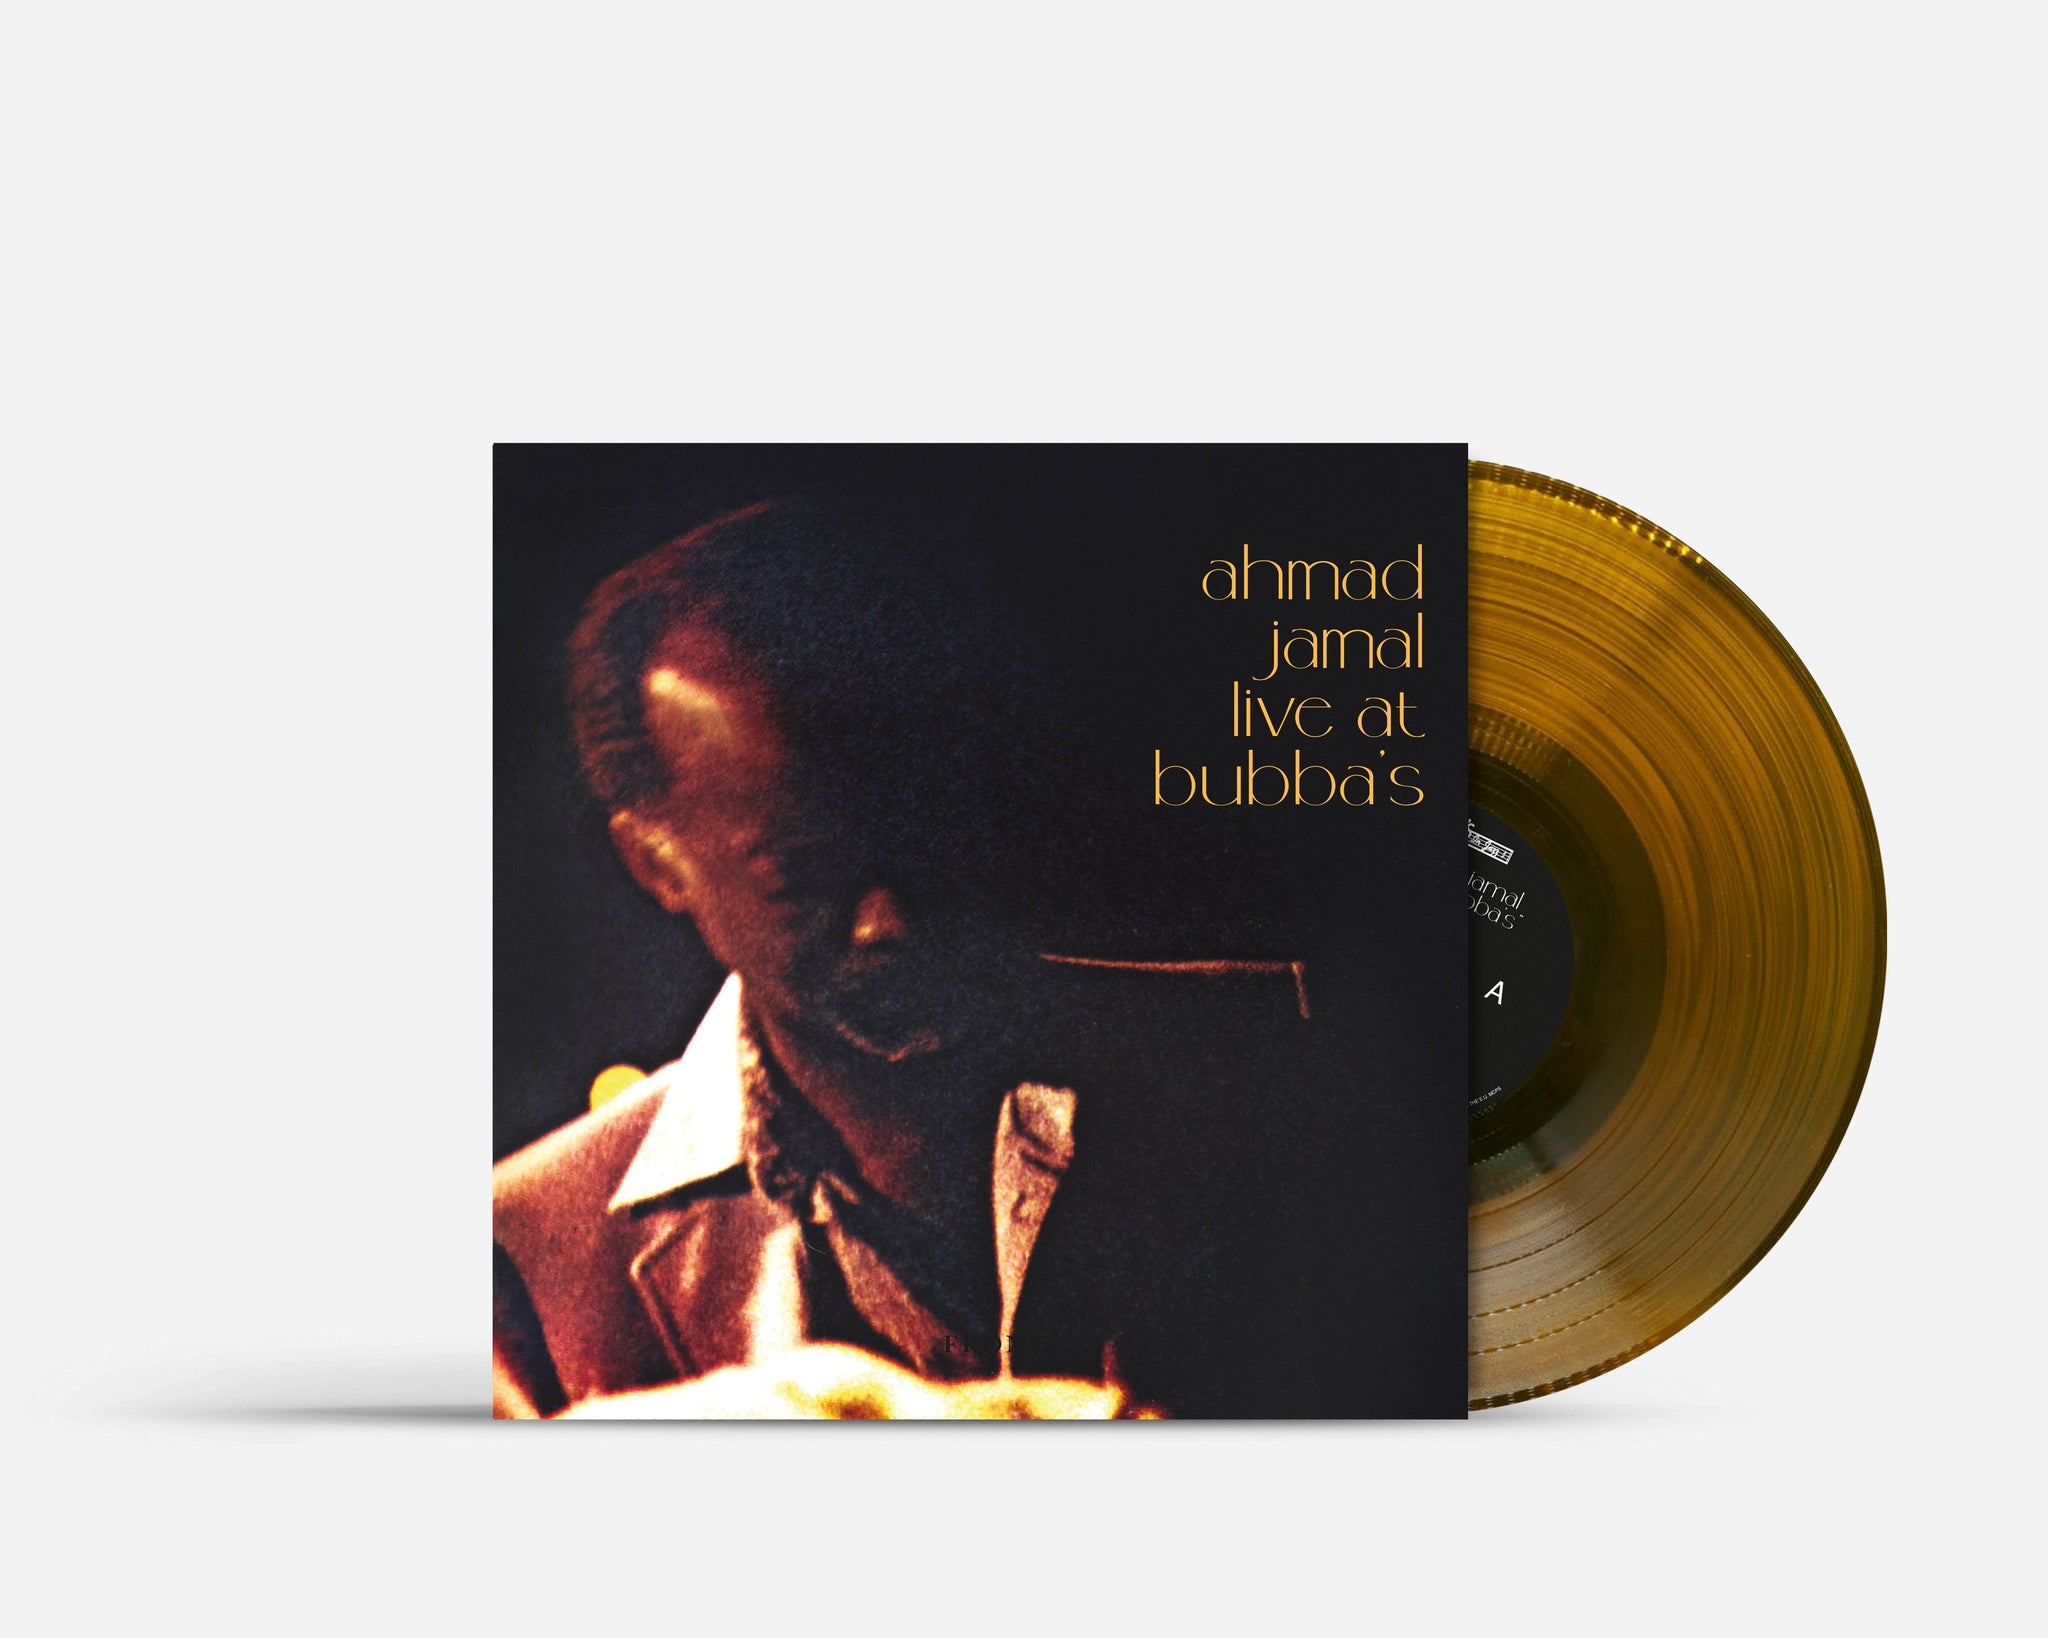 AHMAD JAMAL - Live at Bubba's - 1 LP - 2 Colour variations - Black Vinyl or Opaque Amber (Random) Colour Vinyl [RSD 2024]